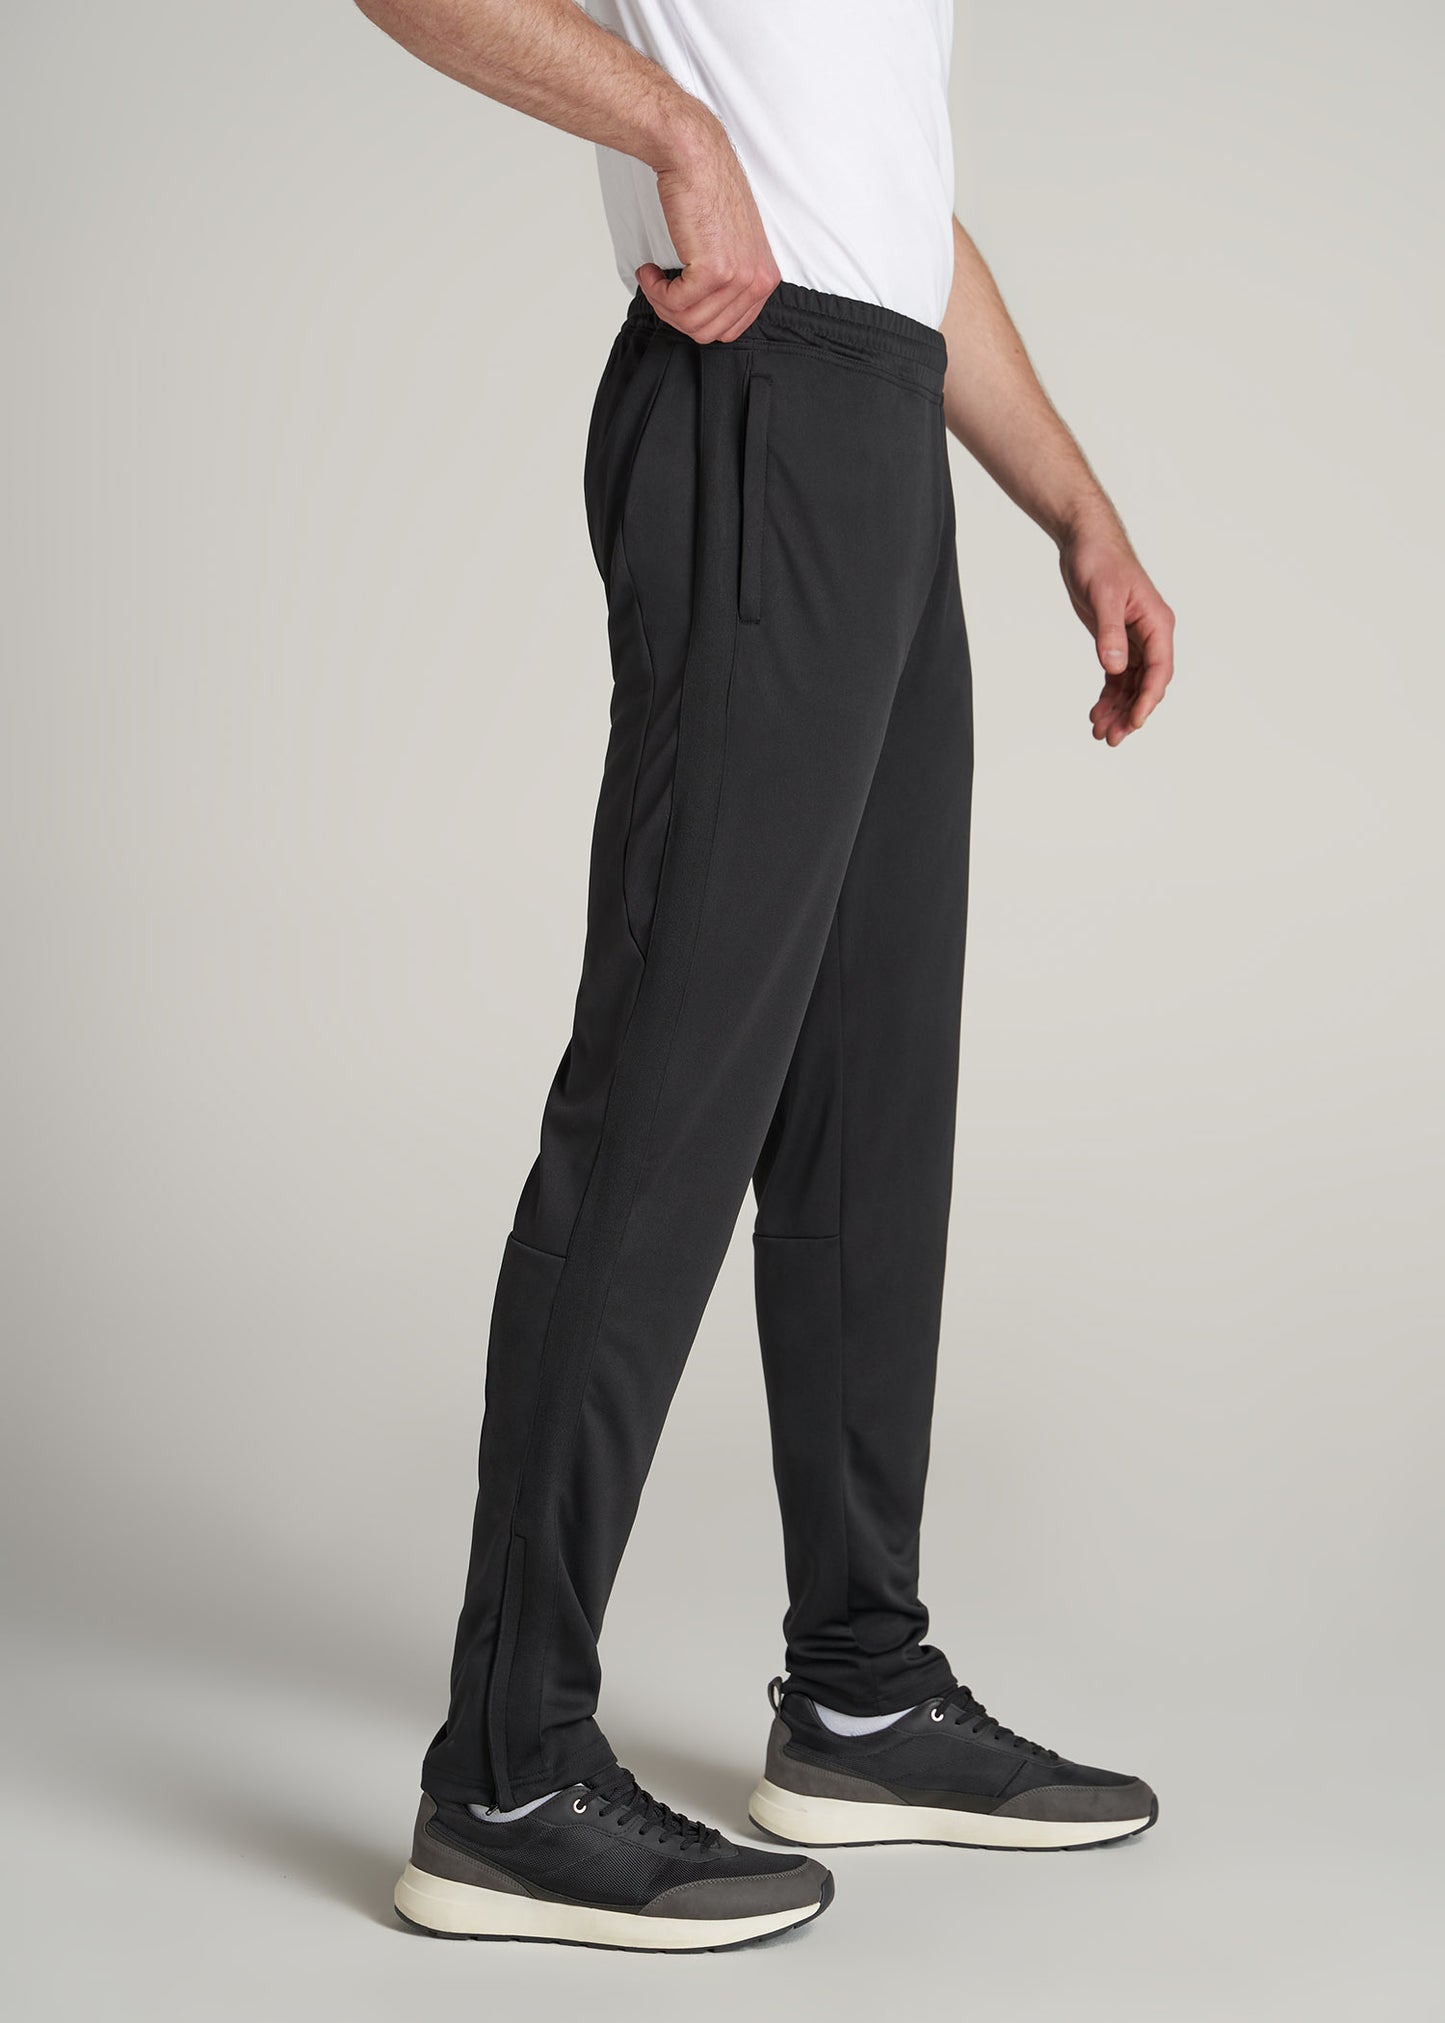 Ashy Black Jeans: Grey Black Stripe Pant For Tall Men